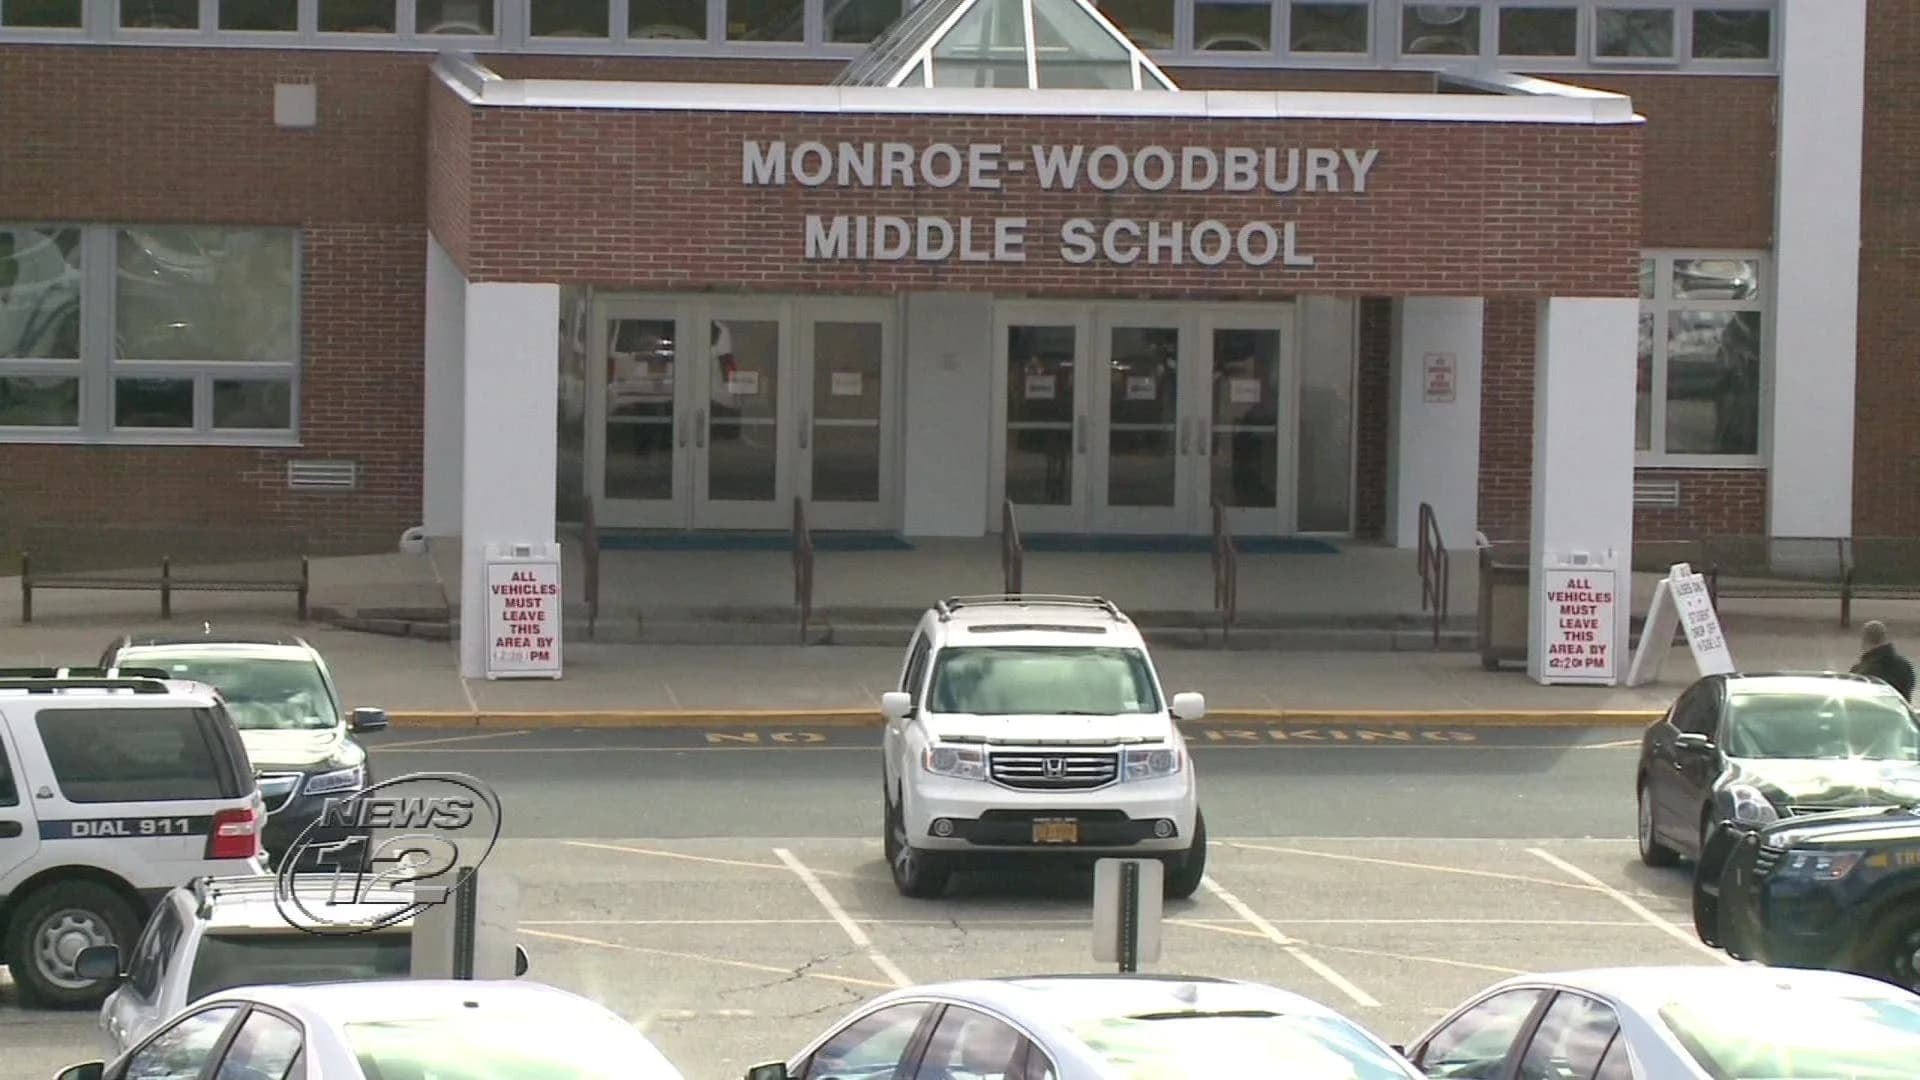 Gun rumor sparks investigation at Monroe-Woodbury M.S.